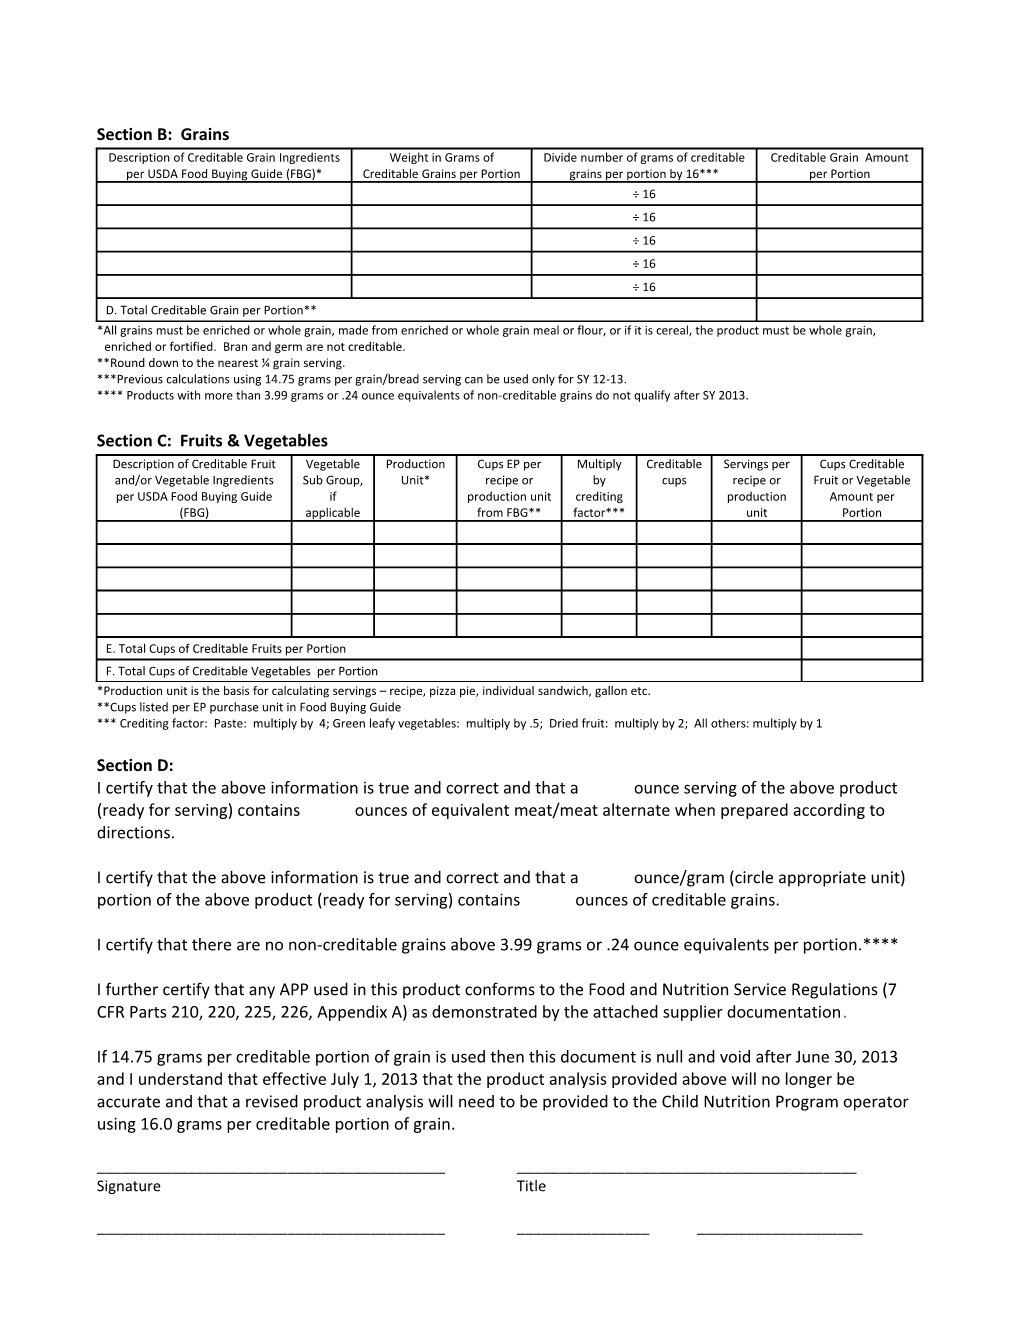 Product Analysis Worksheet Form